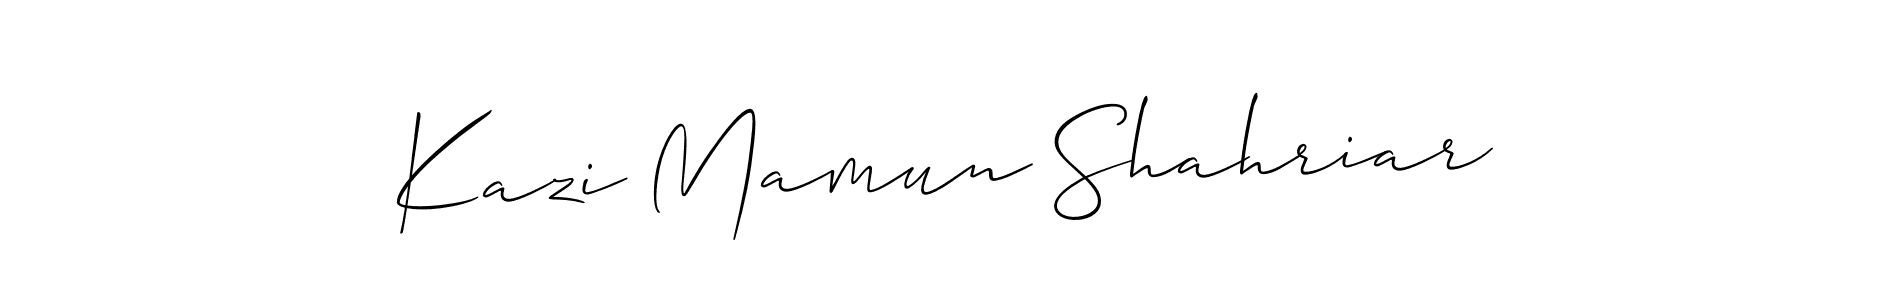 How to Draw Kazi Mamun Shahriar signature style? Allison_Script is a latest design signature styles for name Kazi Mamun Shahriar. Kazi Mamun Shahriar signature style 2 images and pictures png